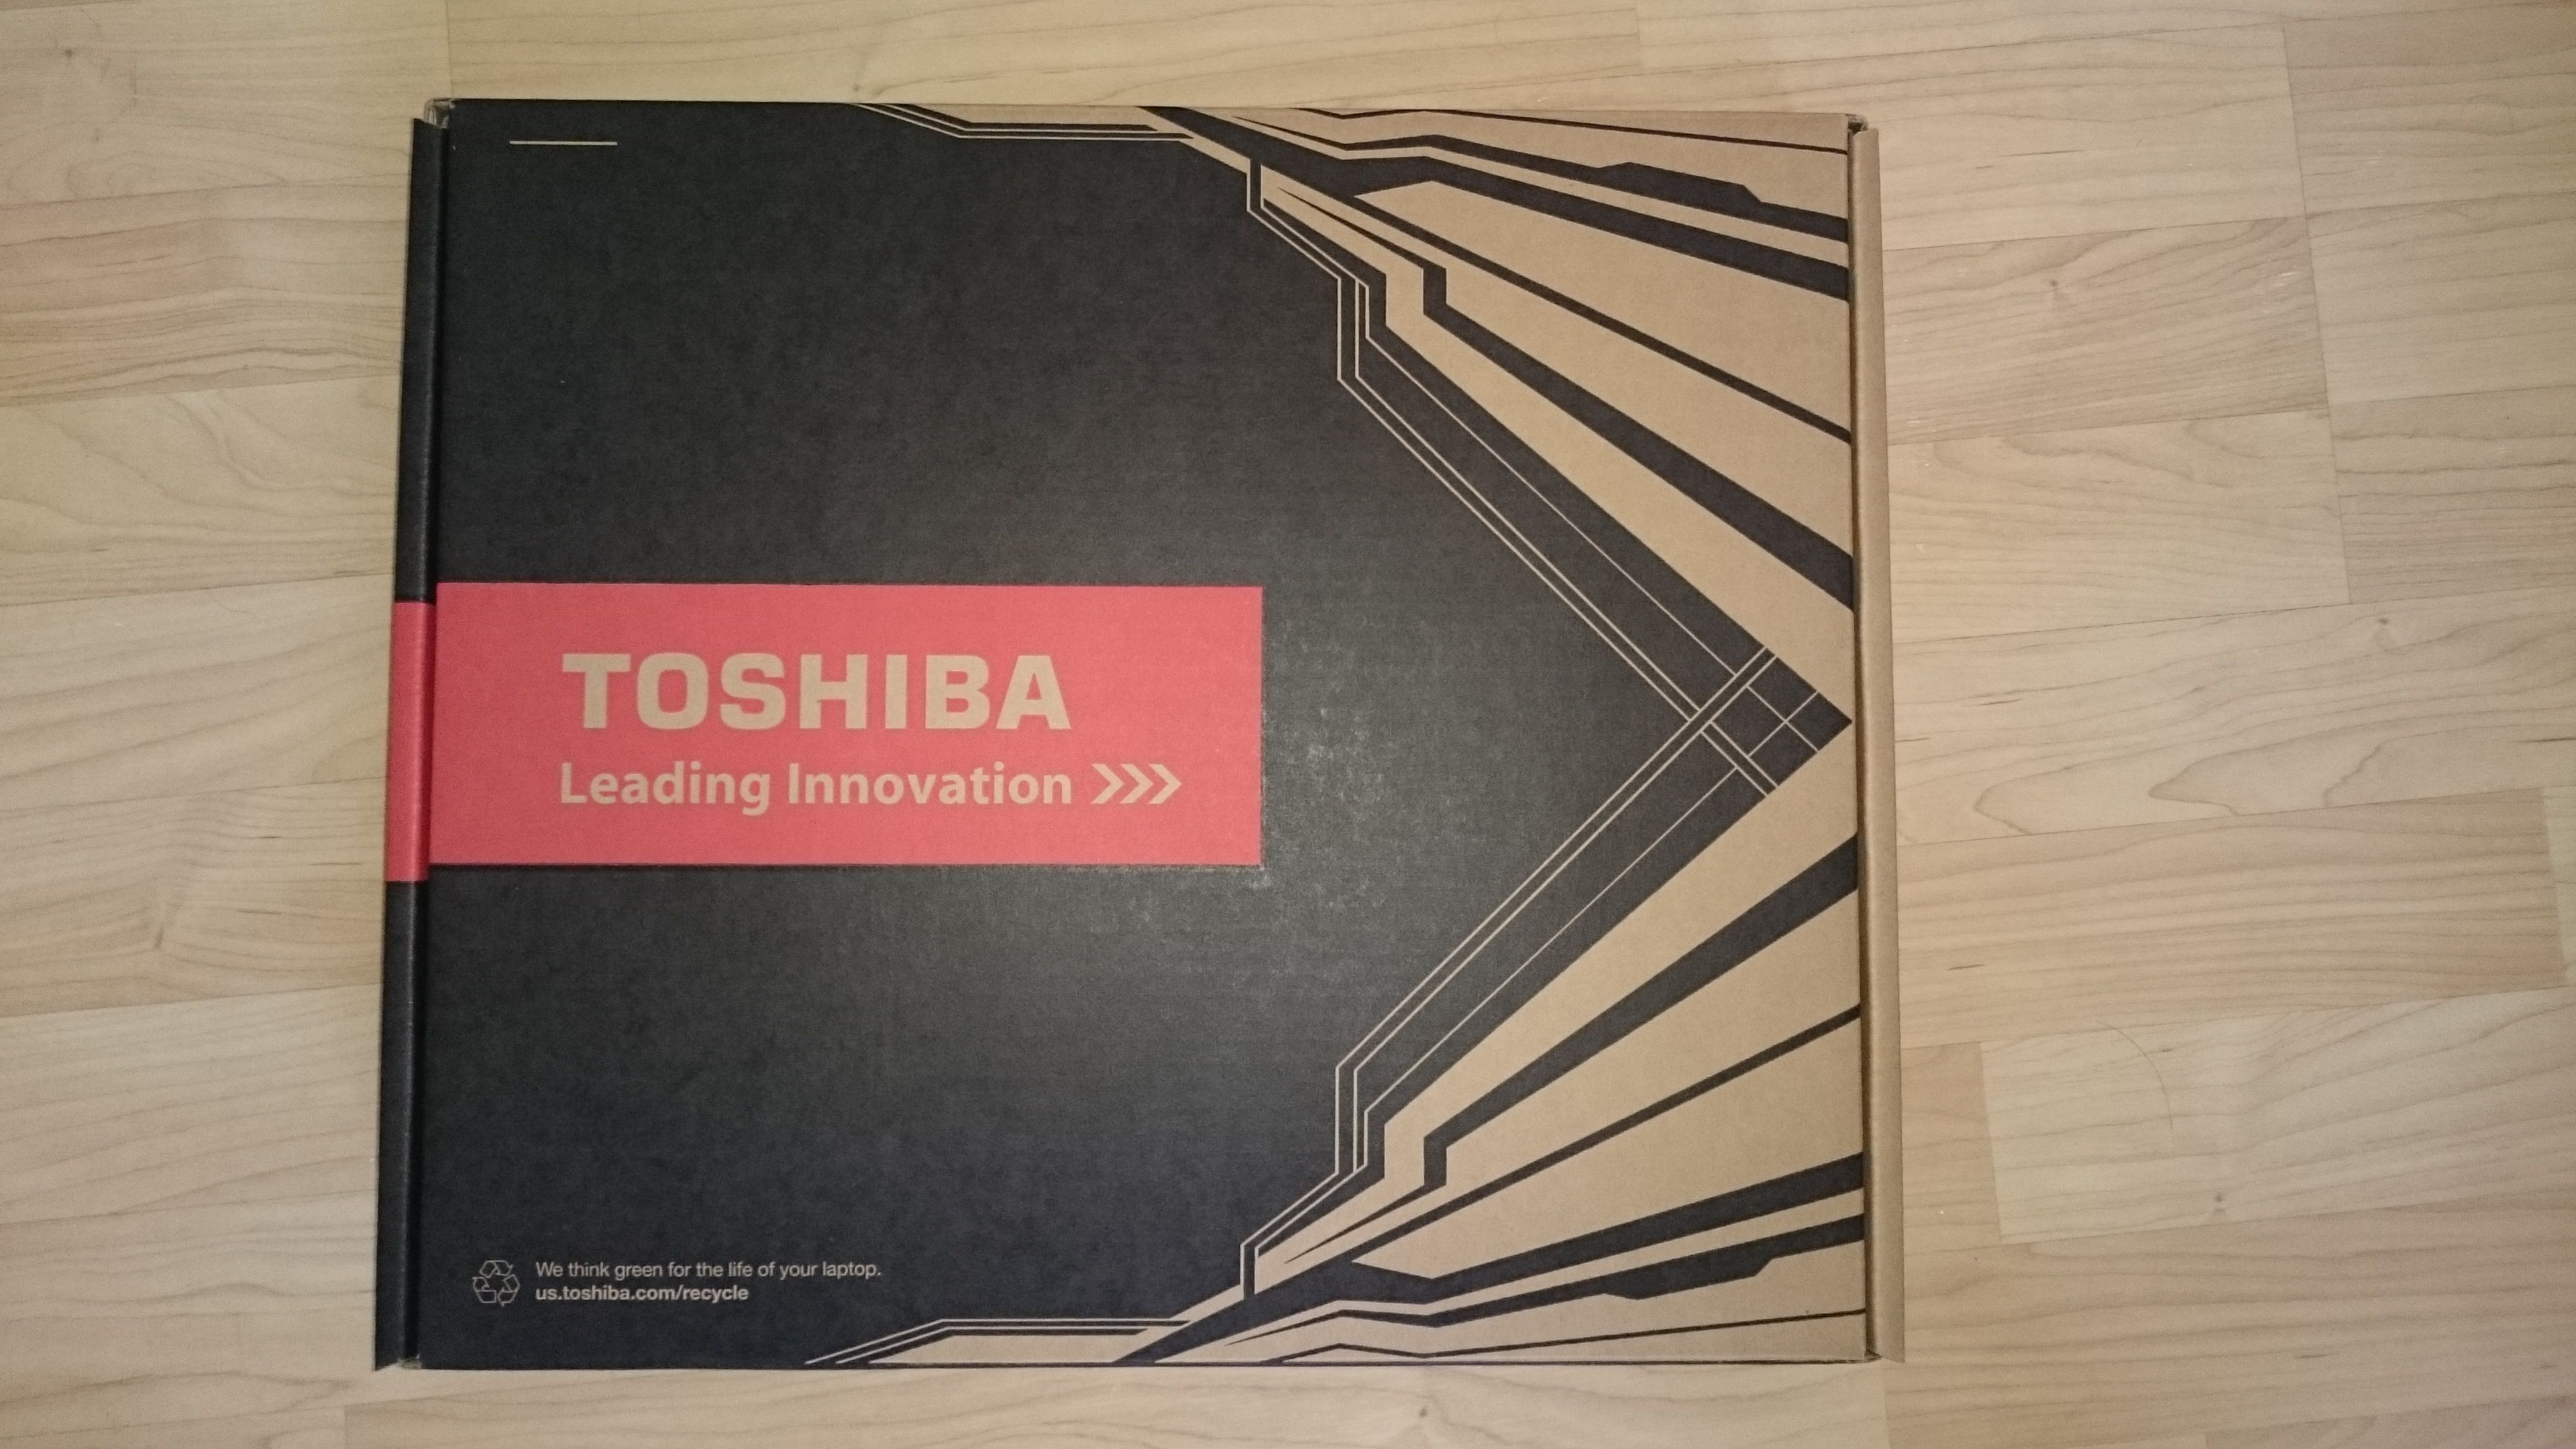 Toshiba satellite C855-S5115 Laptop i3 2.5GHz 4GB 500GB 15.6"